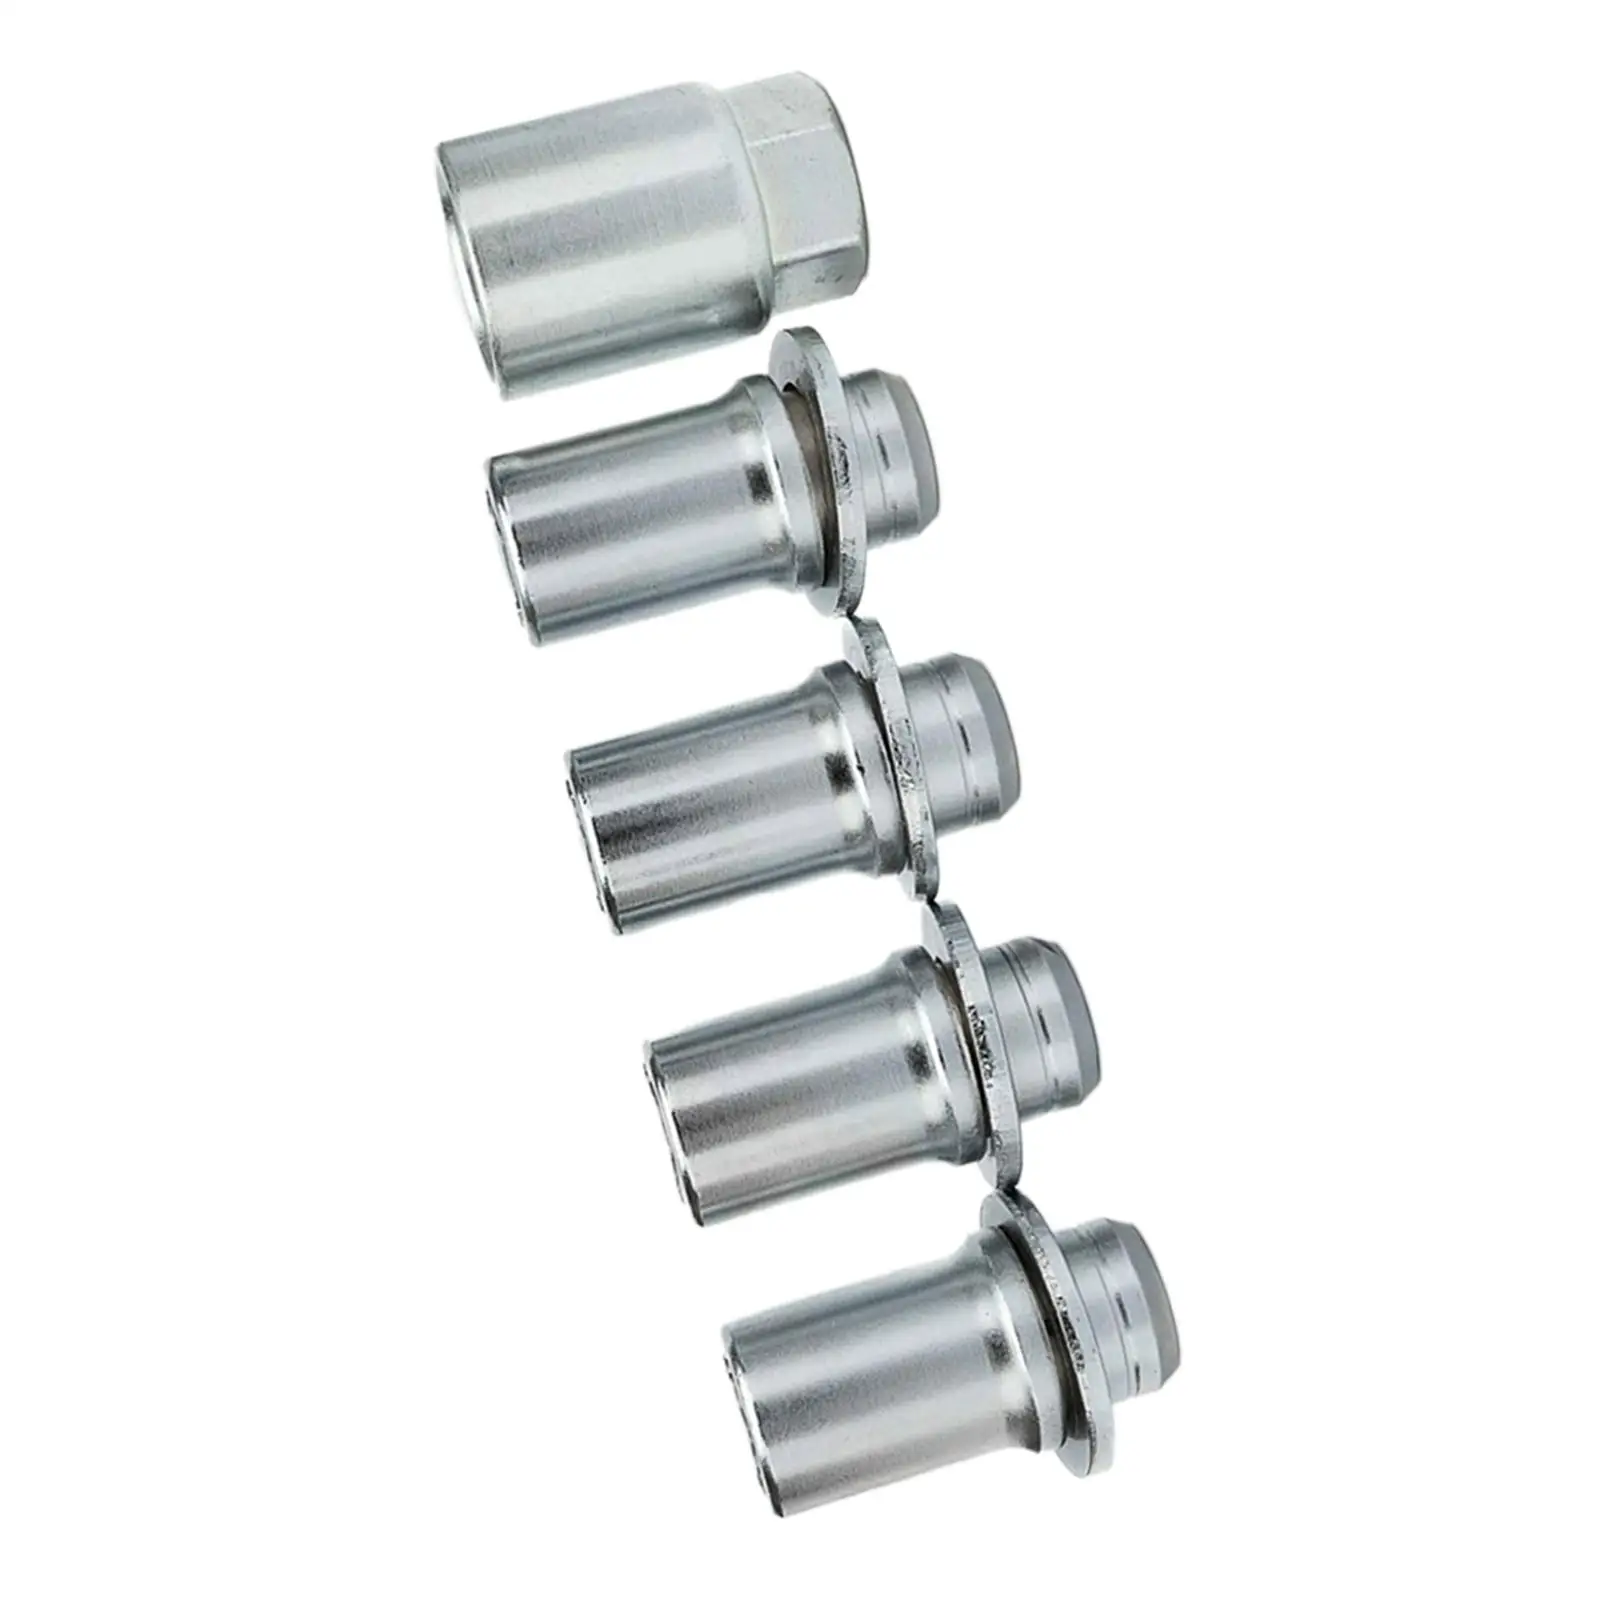 5 Pieces Car Wheel Lock Lug Nut Set 00276-00901 Anti Theft M12x1.5 Replace for  Corolla  Sequoia GS400